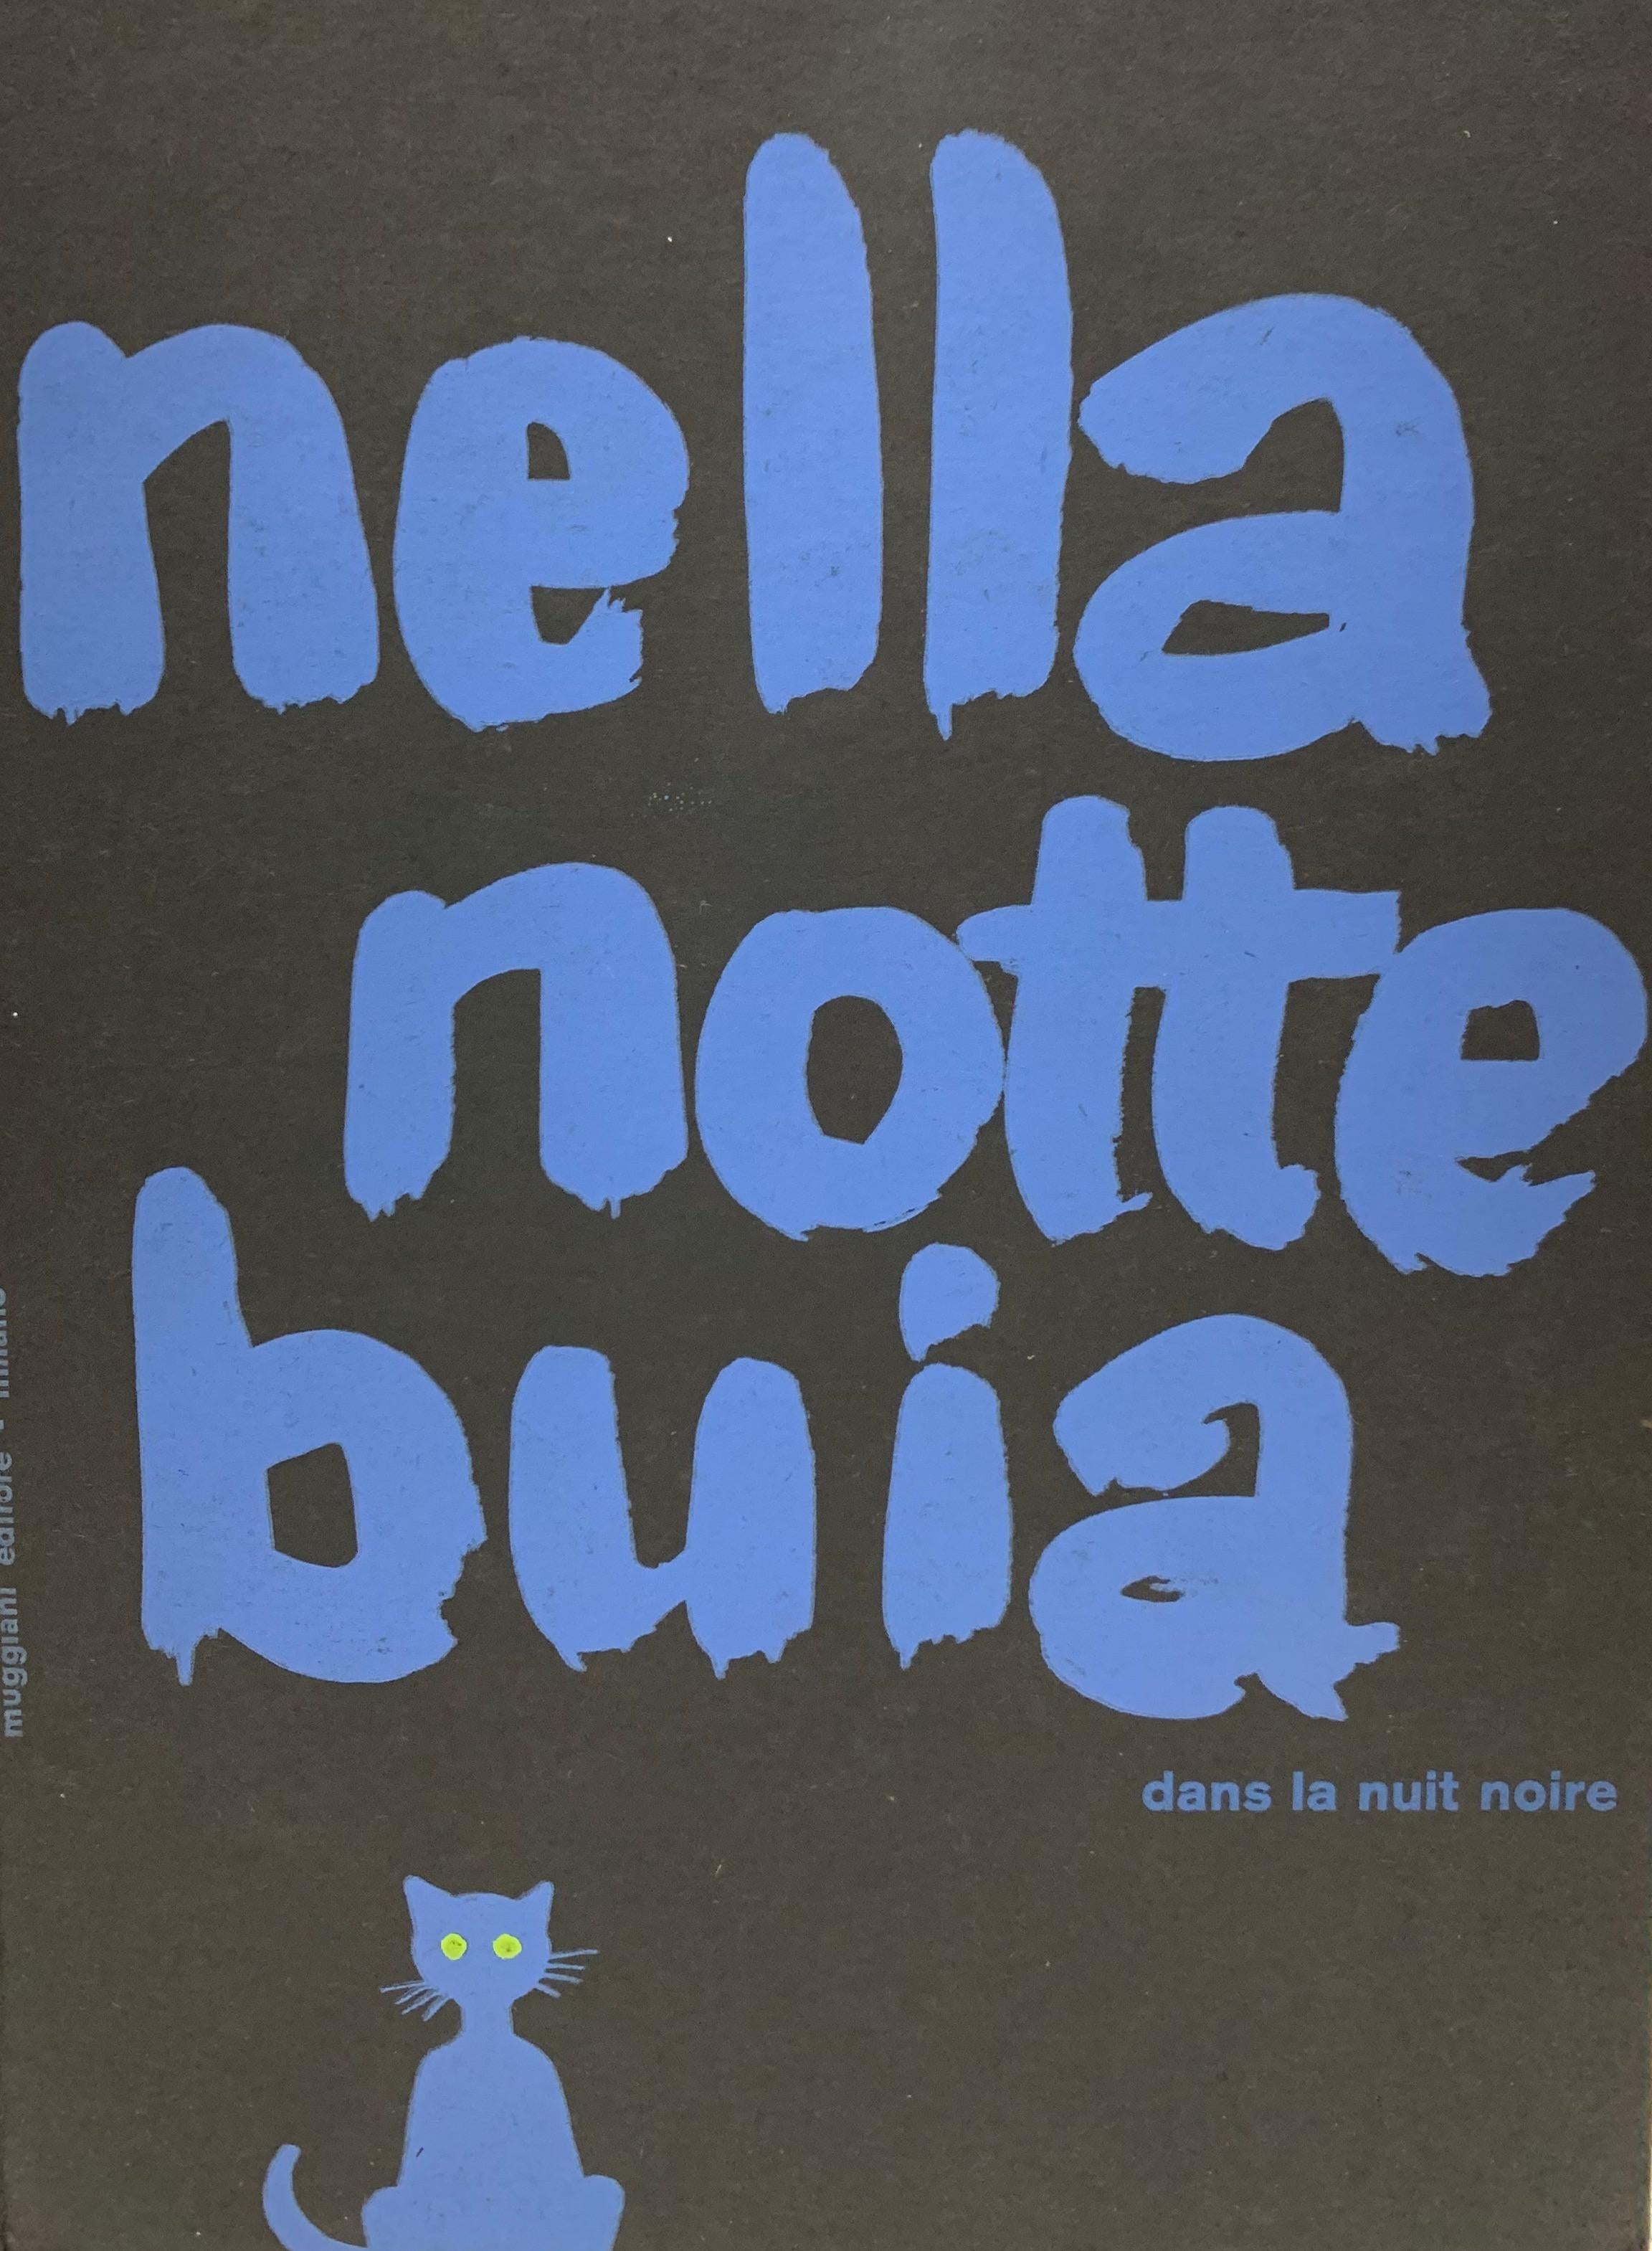 Bruno Munari Animal Print – Nella Notte Buia / dans la nuit noire